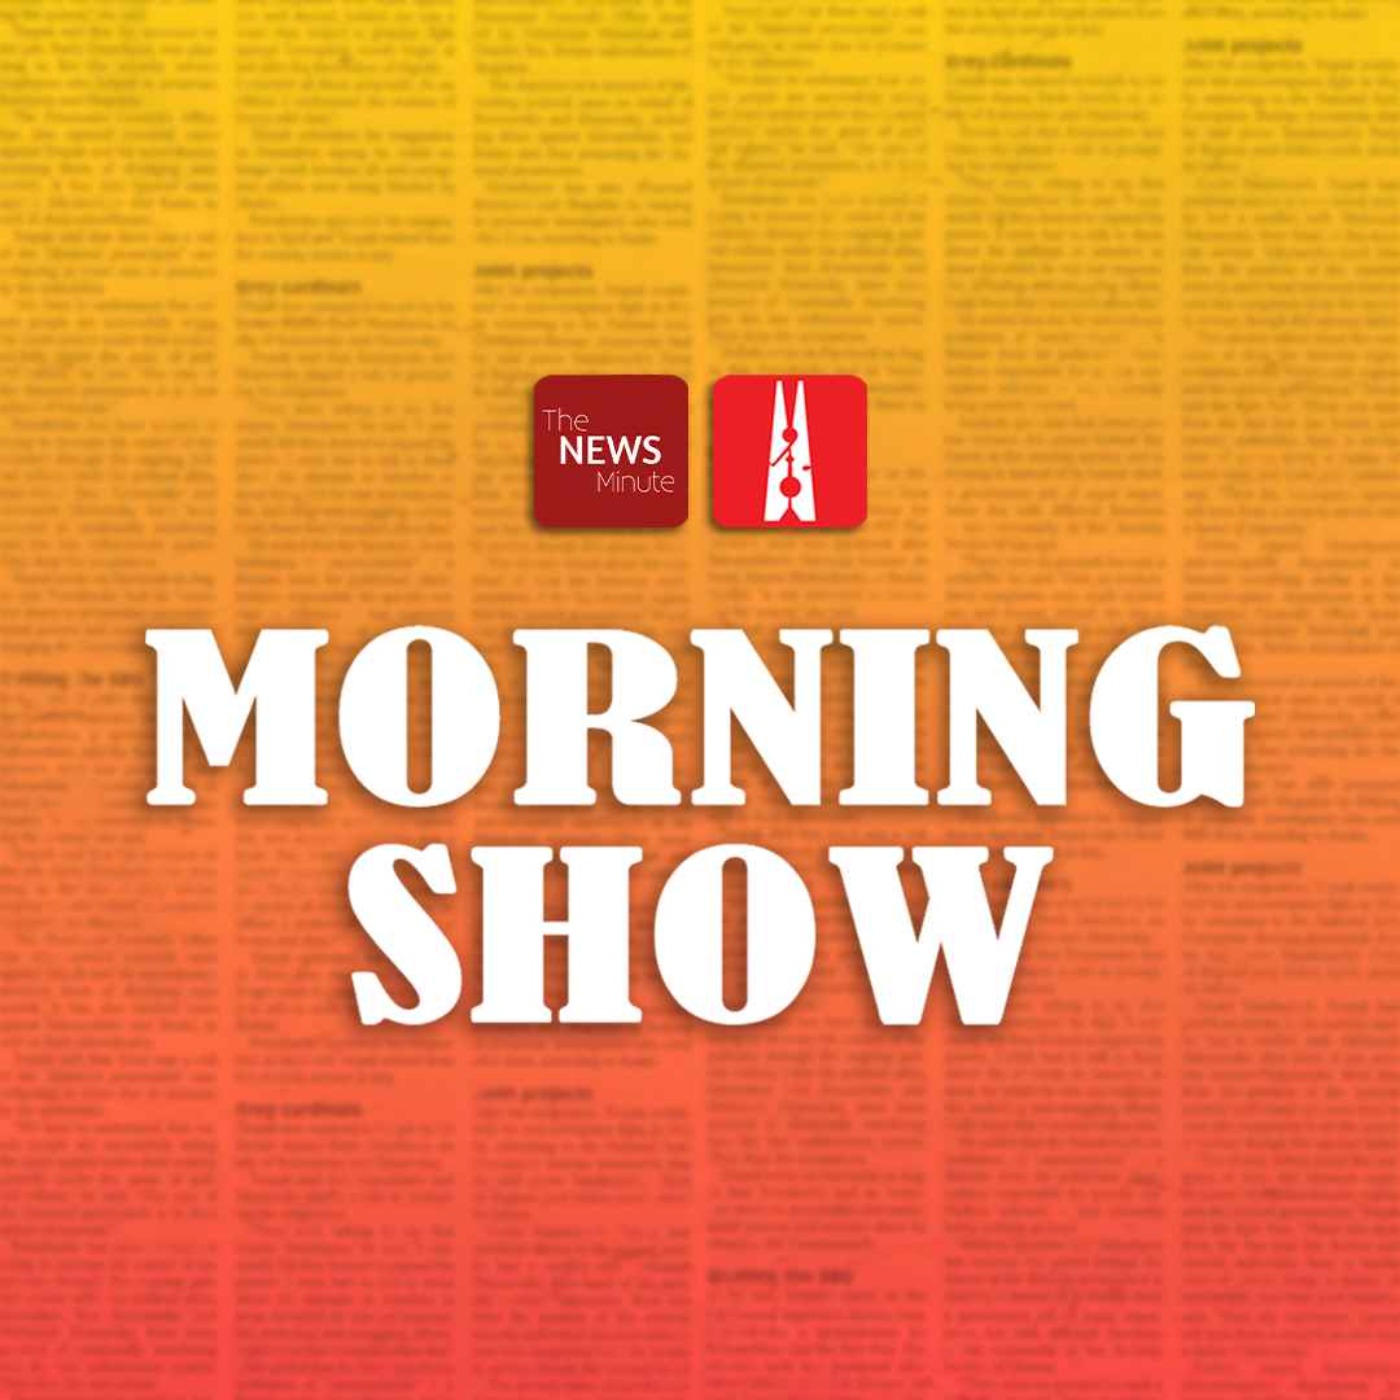 Morning Show: Paddy as poll pivot, Mahadev app, Chhattisgarh pride